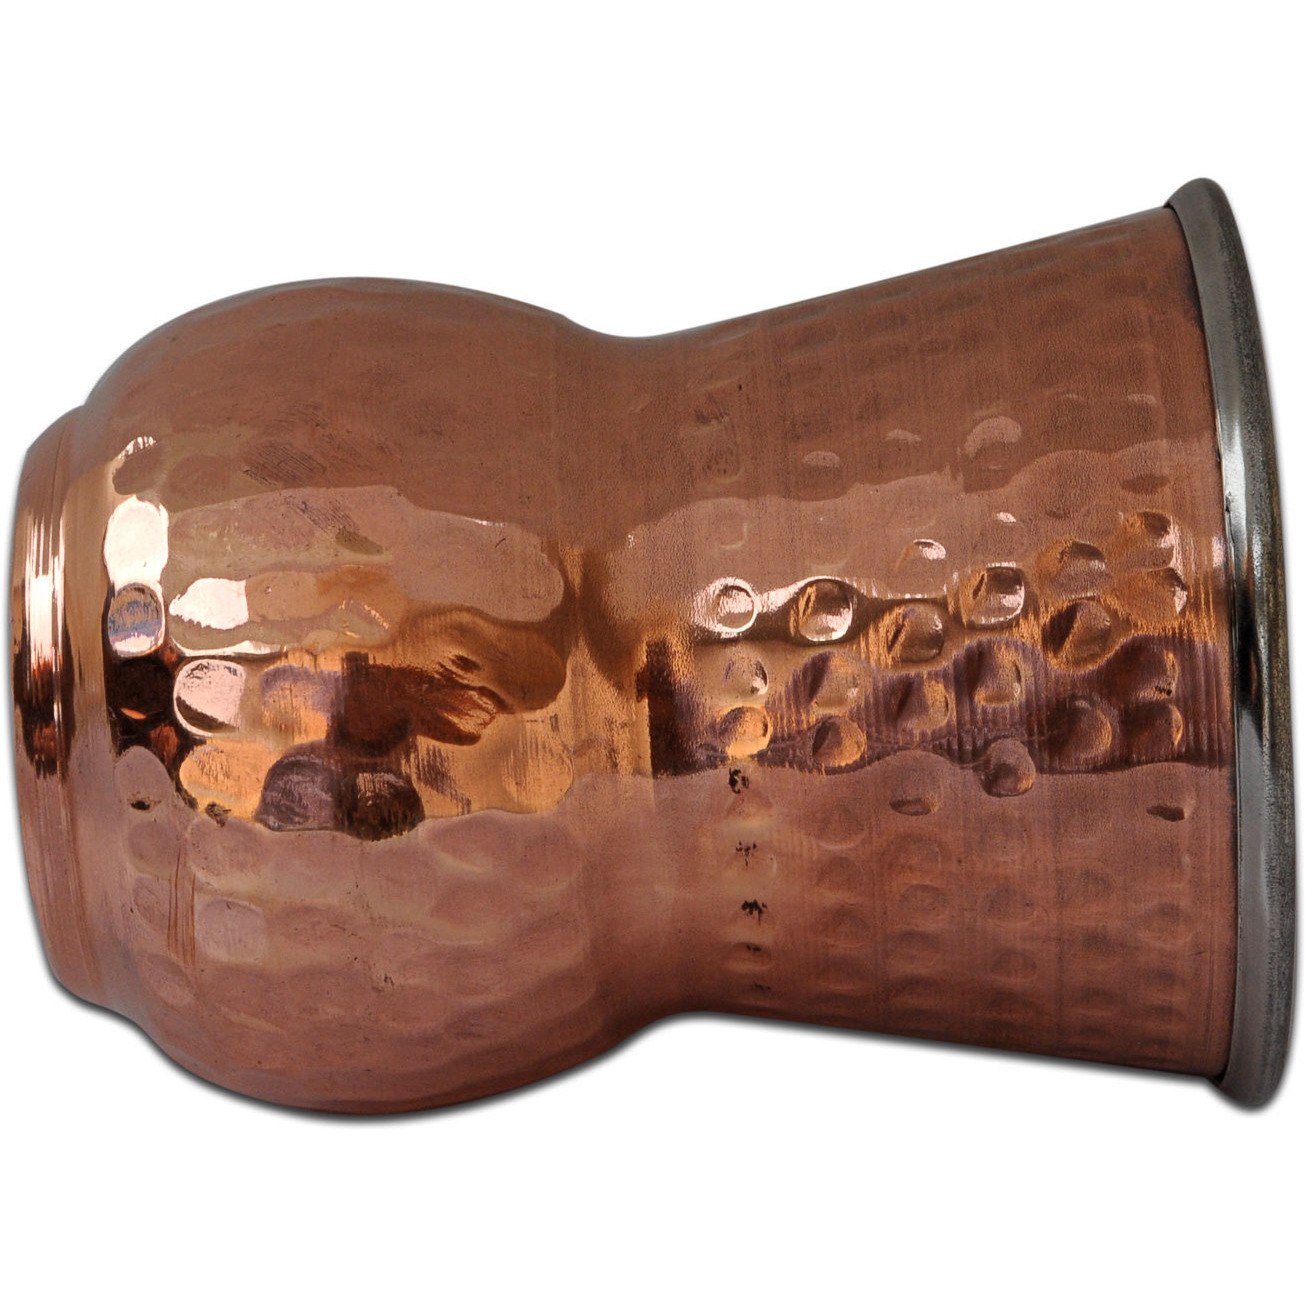 Set of 5 - Prisha India Craft B. Copper Muglai Matka Glass Inside Stainless Steel Hammered Style Drinkware Tumbler Handmade Copper Cups - Traveller's Copper Mug